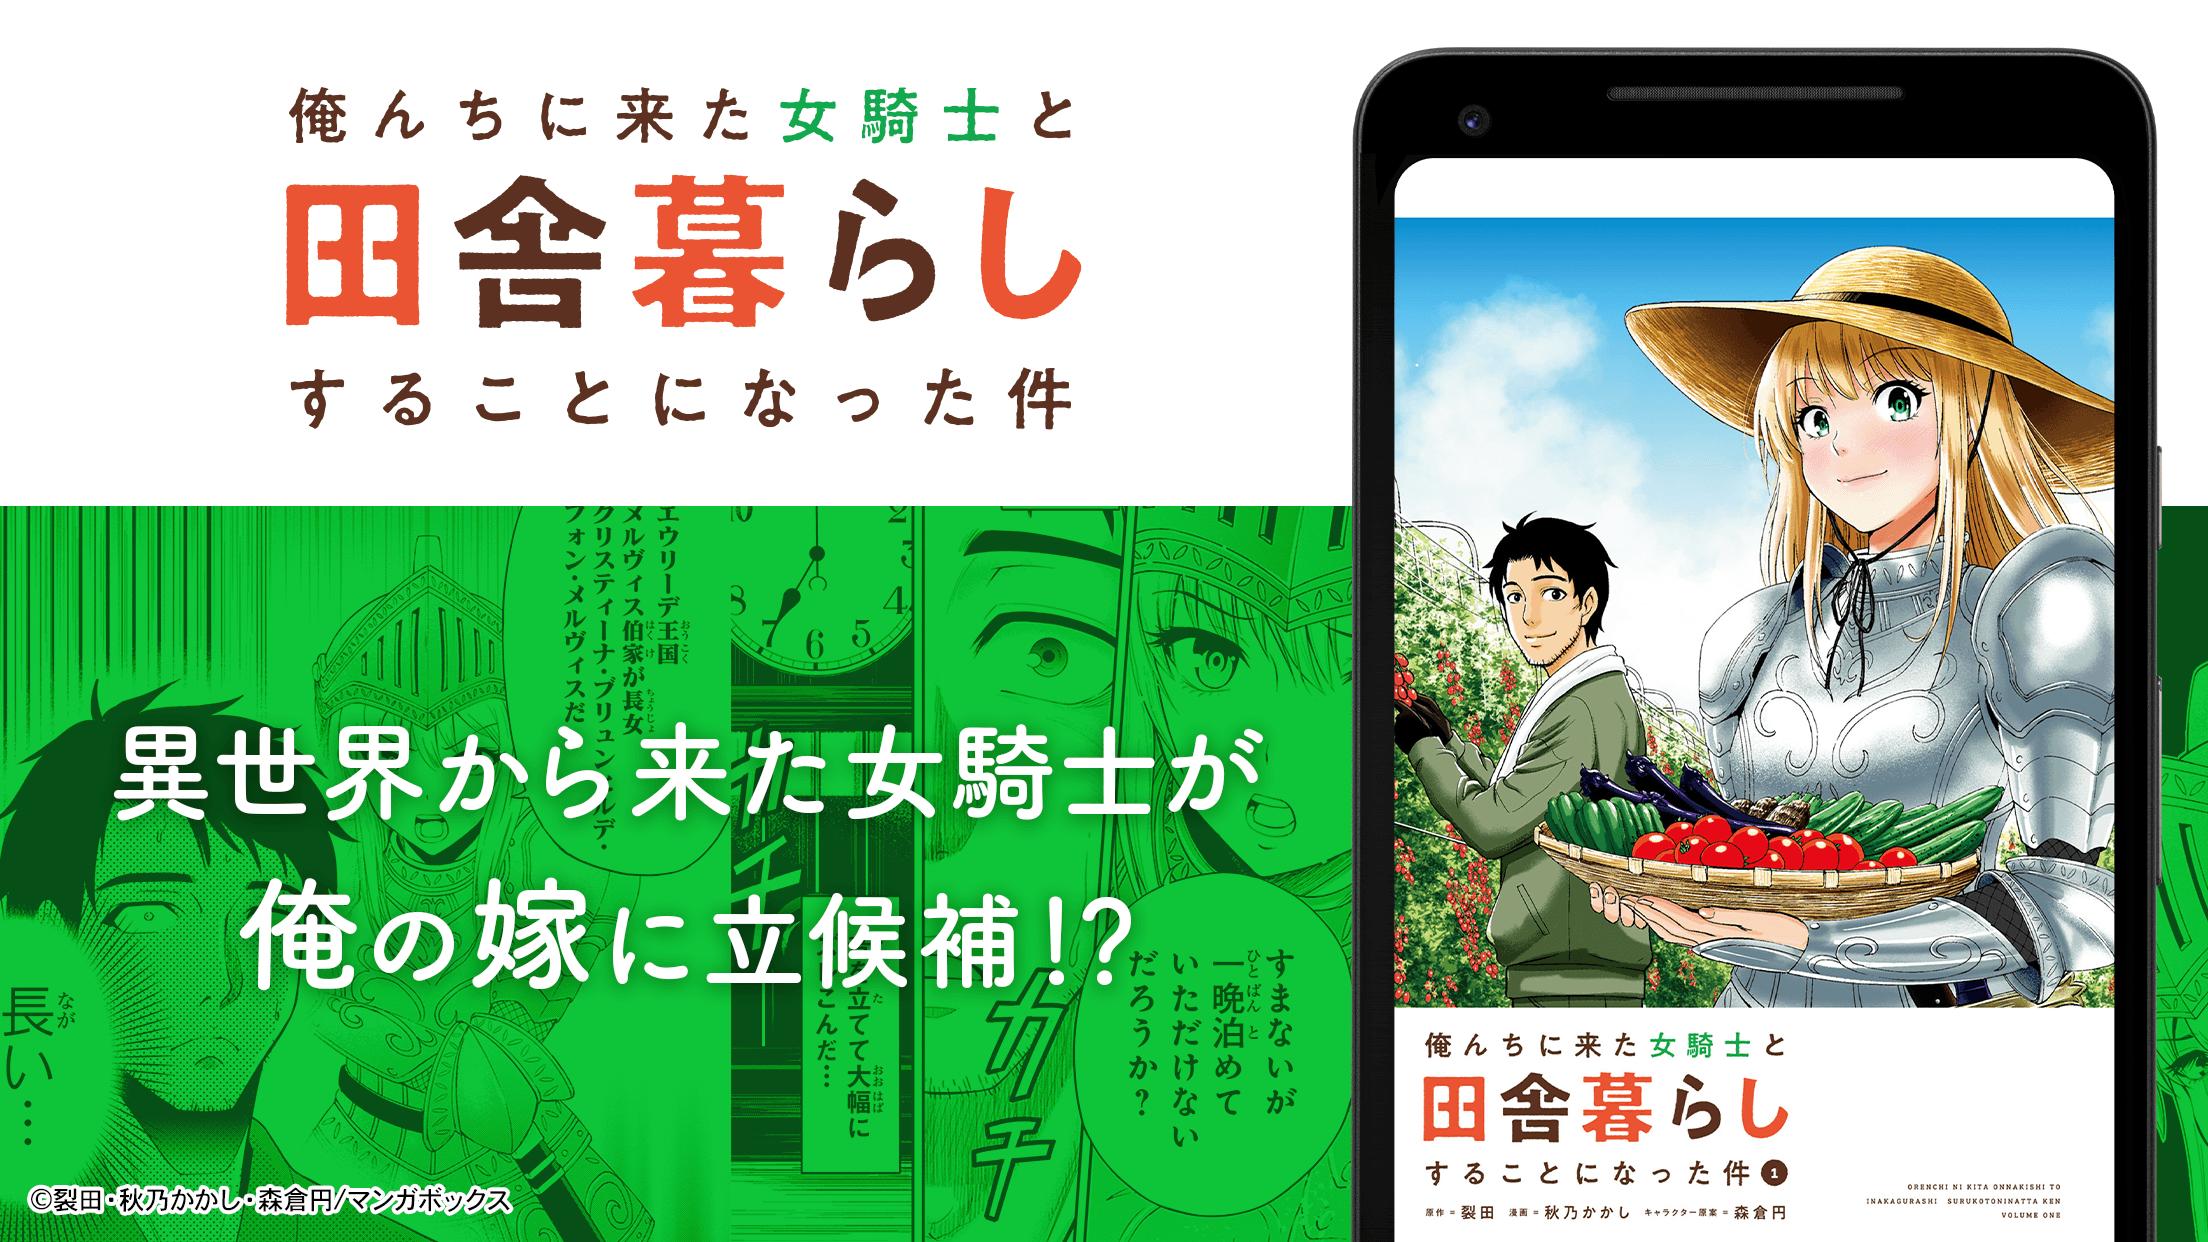 Manga Box: Manga App 2.4.9 Screenshot 8